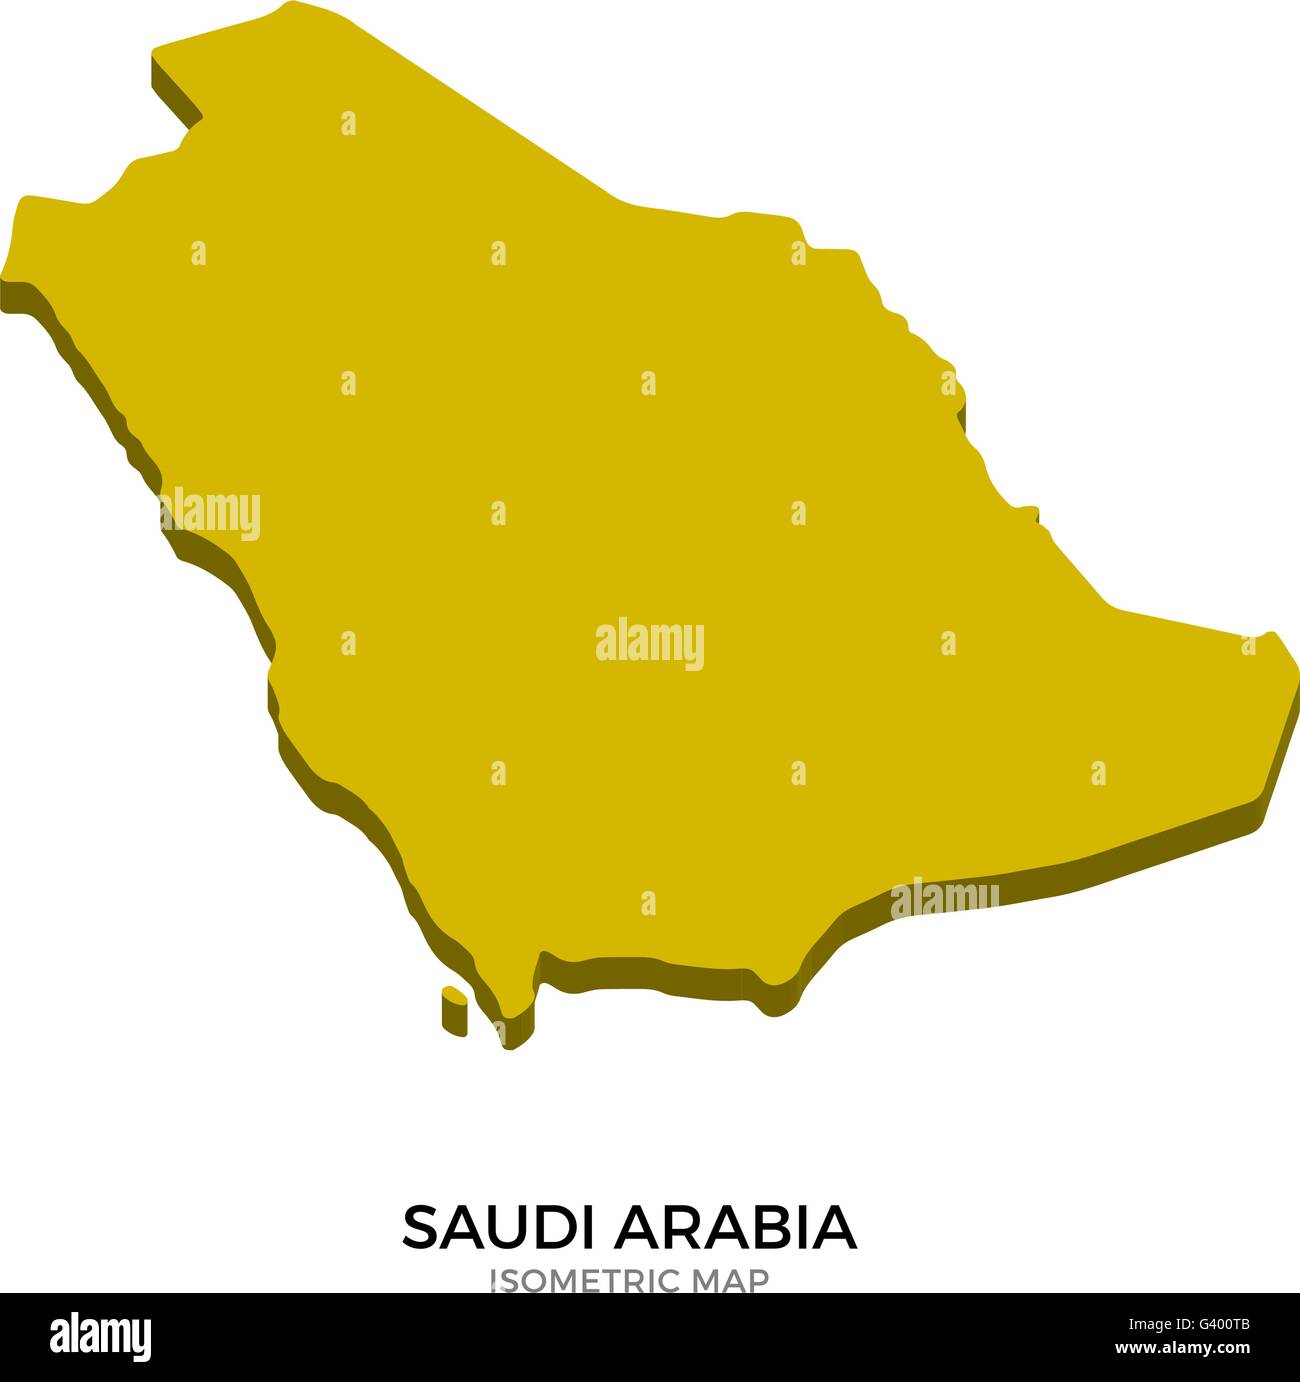 Isometric map of Saudi Arabia detailed vector illustration Stock Vector ...